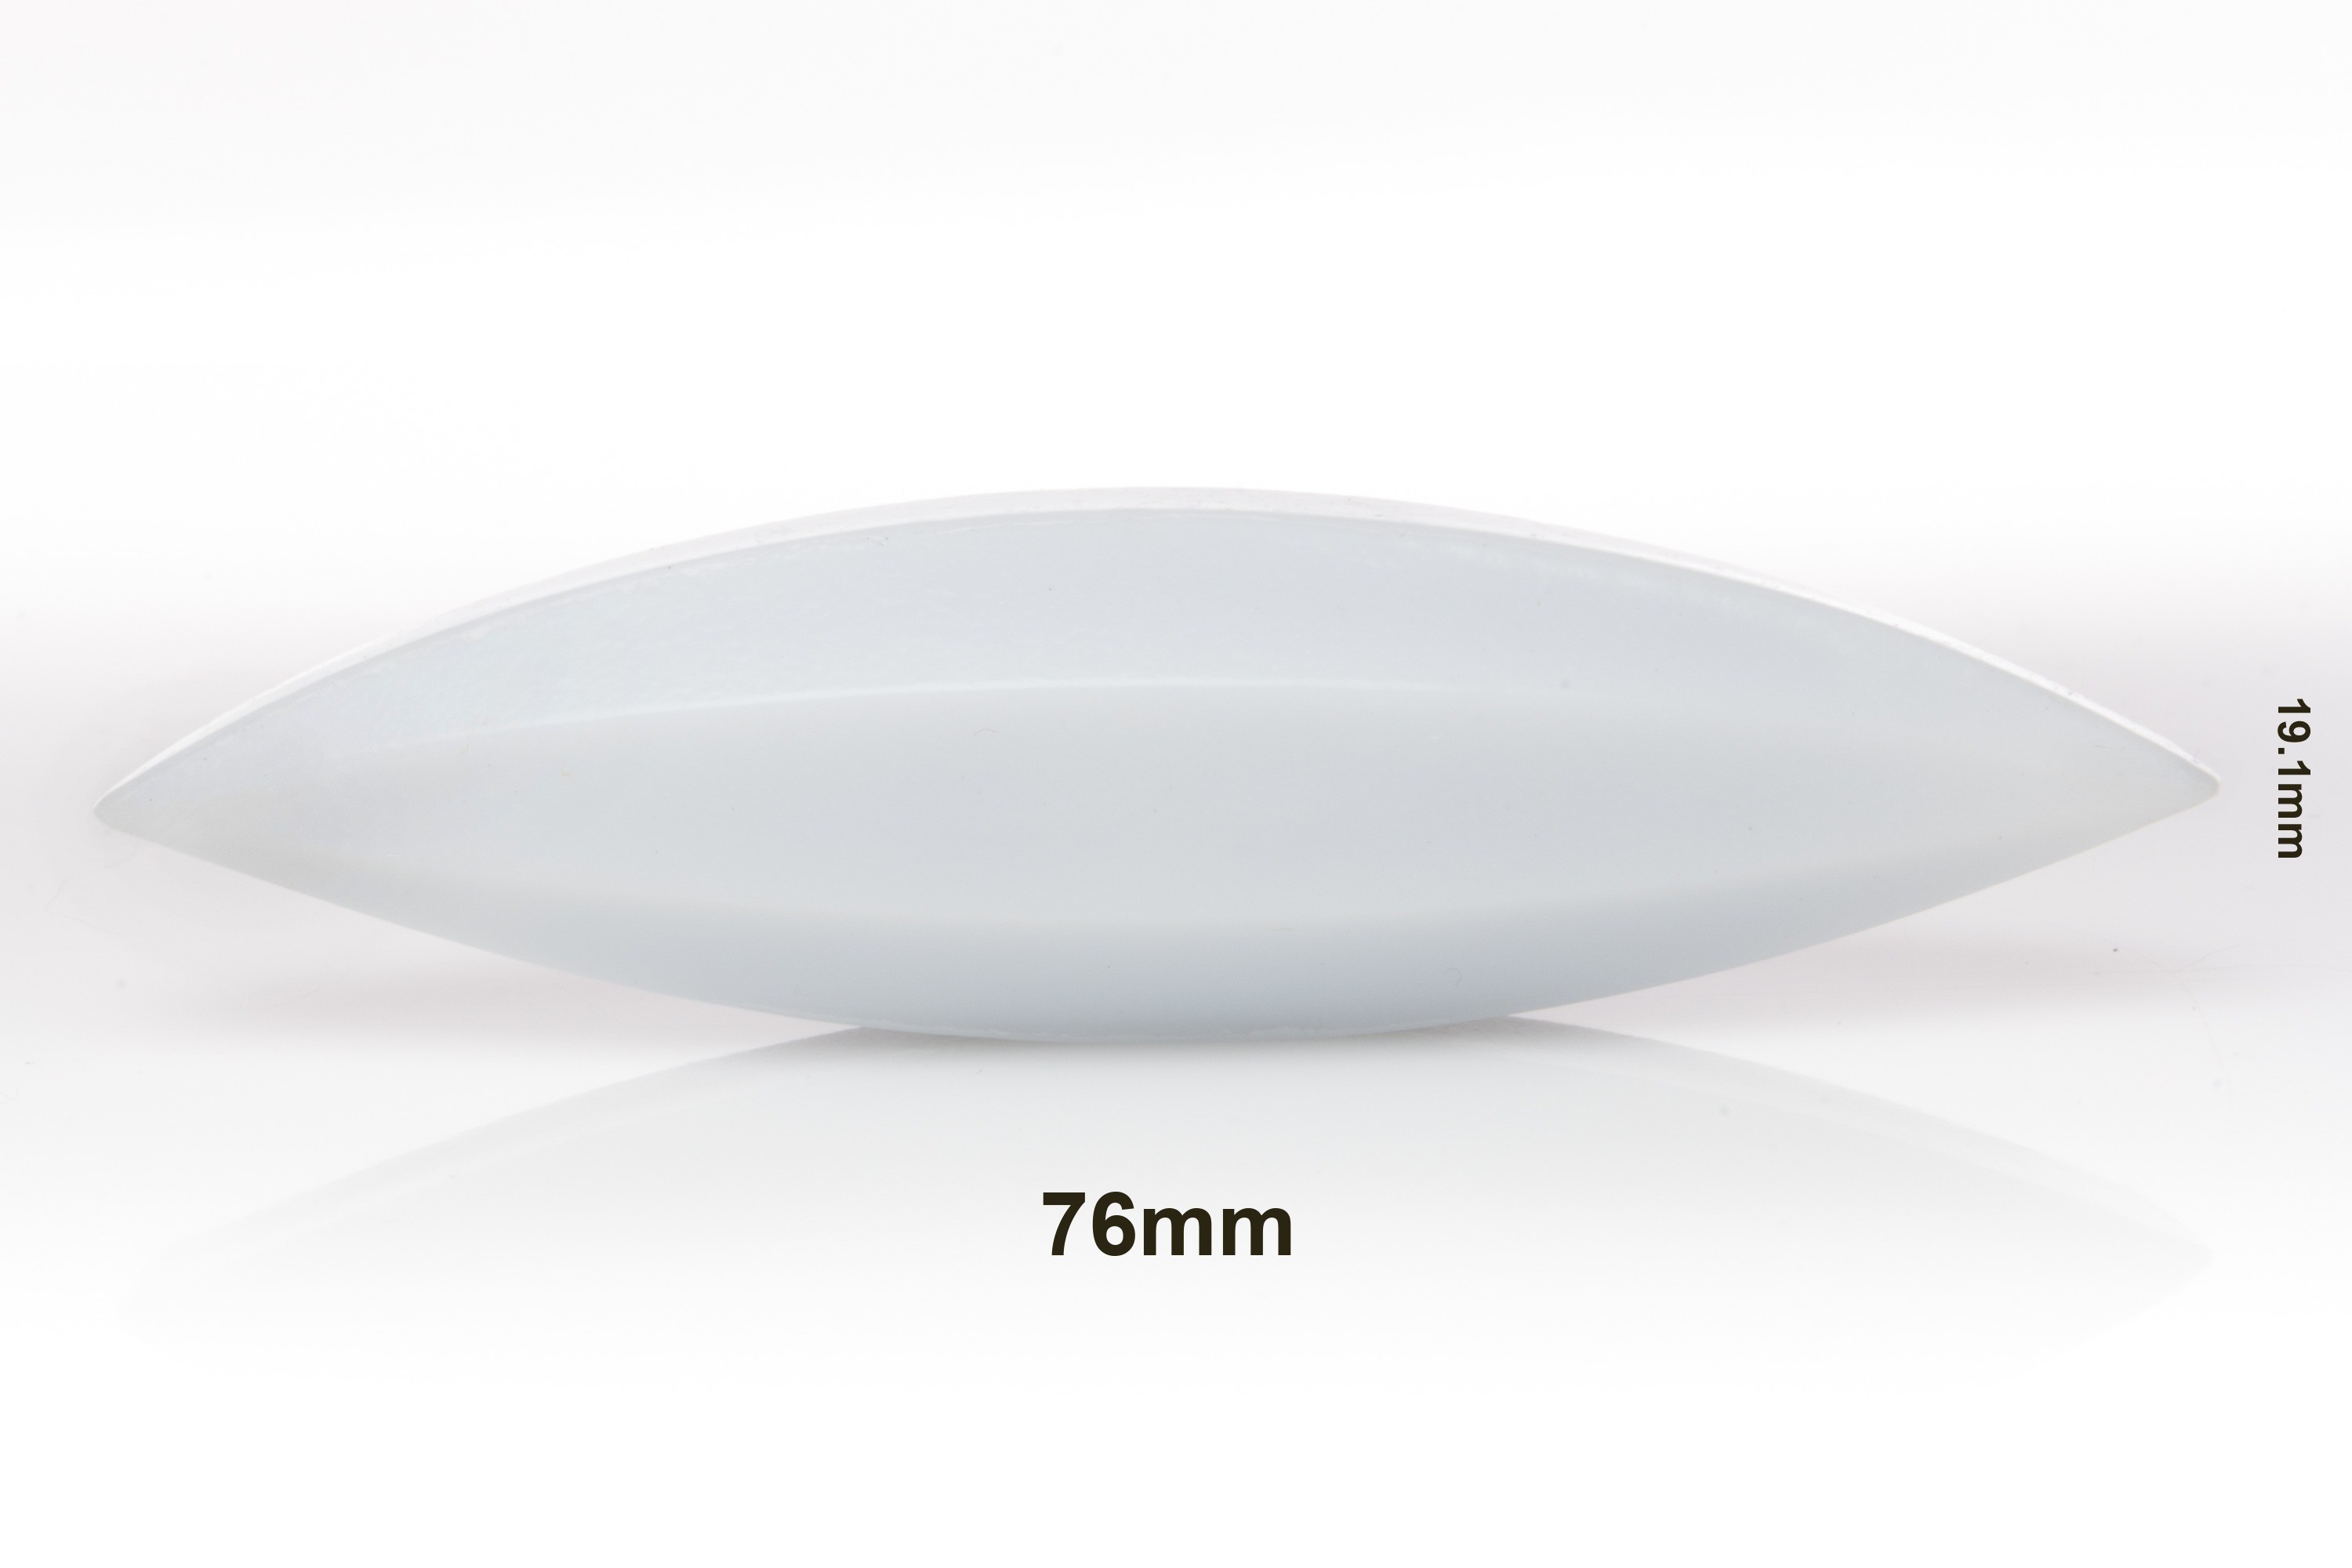 SP Bel-Art Spinbar Teflon Elliptical (Egg-Shaped) Magnetic Stirring Bar; 76 x 19.1mm, White